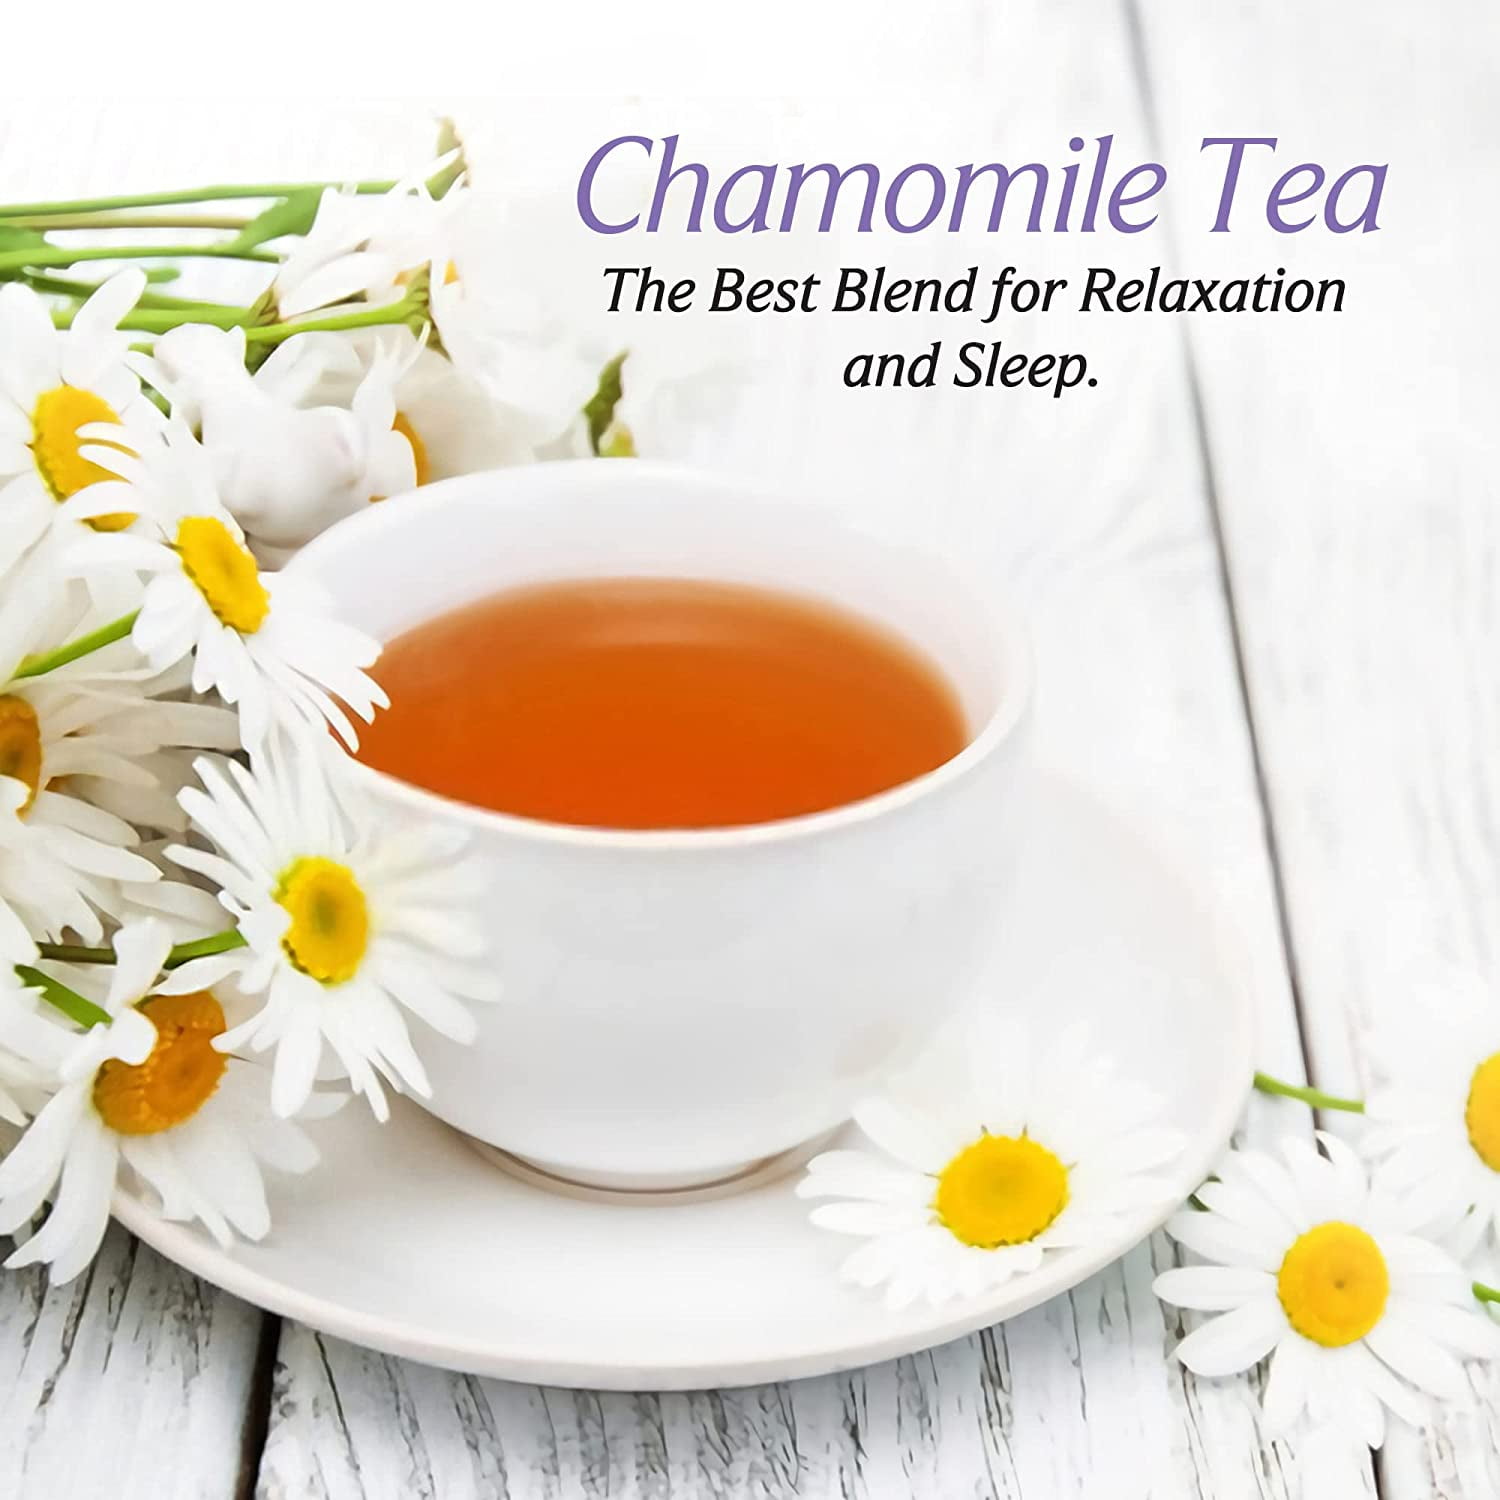 Premium Chamomile Tea - Te de Manzanilla by Betel Natural - Relax the Day  Away - 30 Tea Bags 